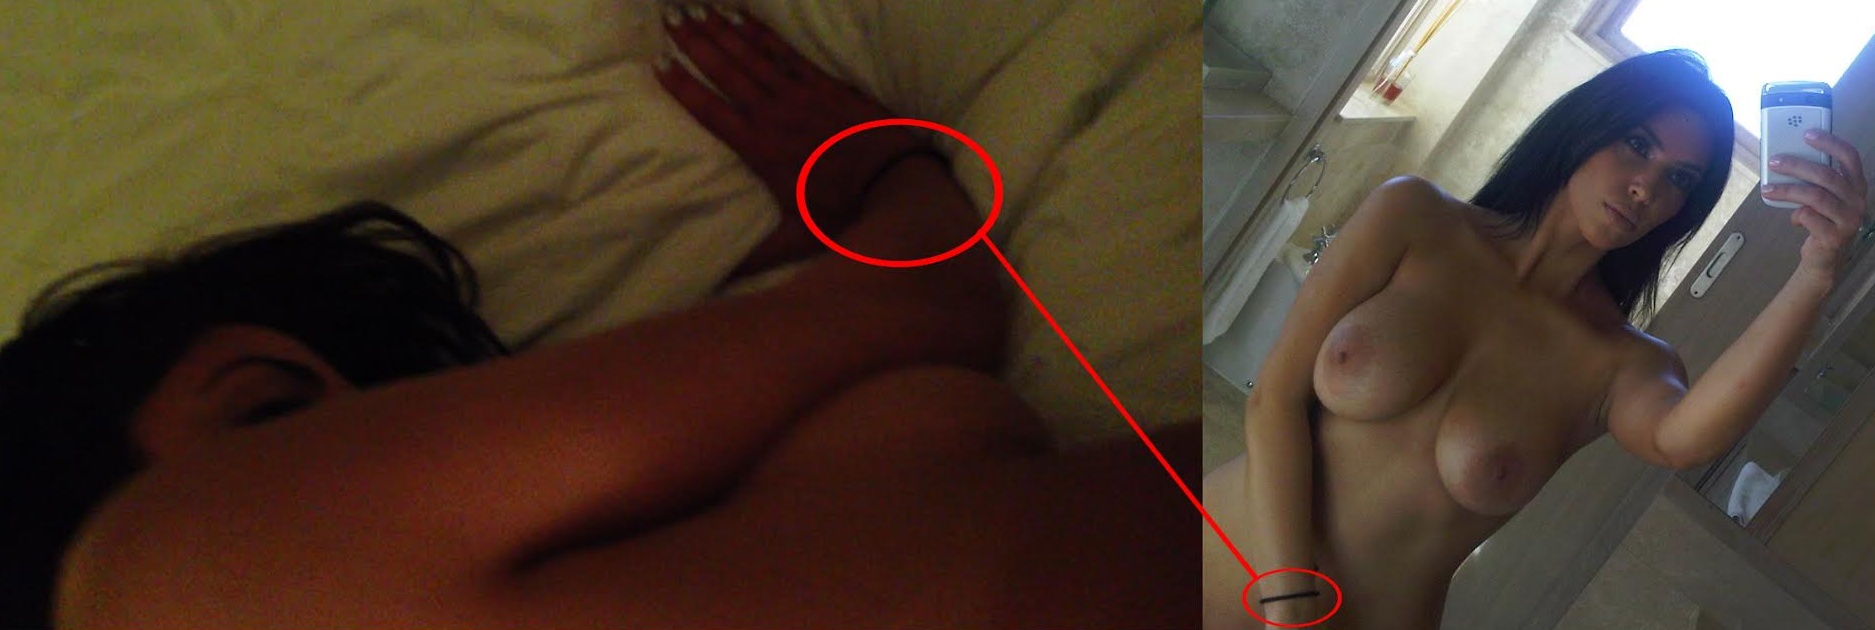 Kourtney kardashian nude photos leaked - 🧡 Kim Kardashian Naked Image...